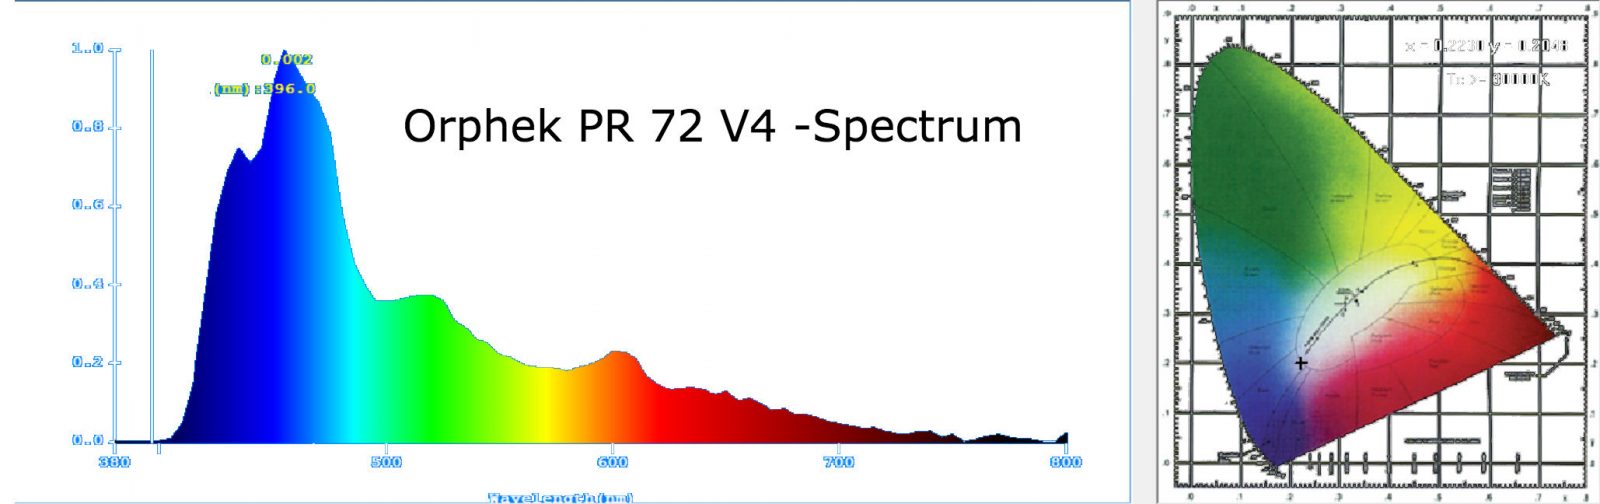 best reef led light spectrum 2020